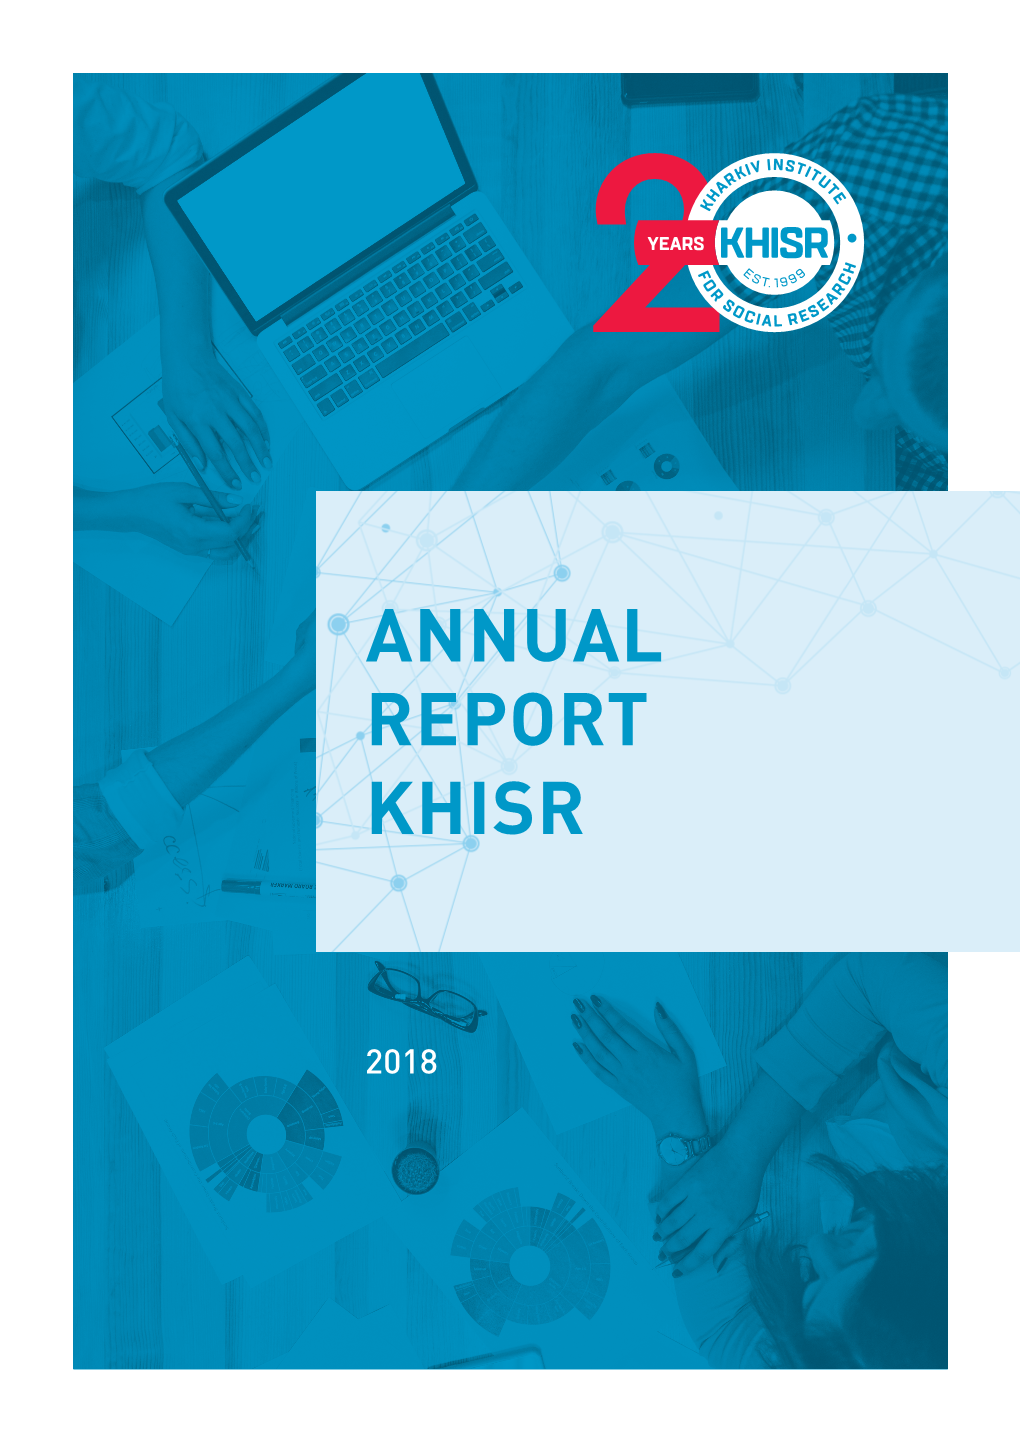 Annual Report Khisr